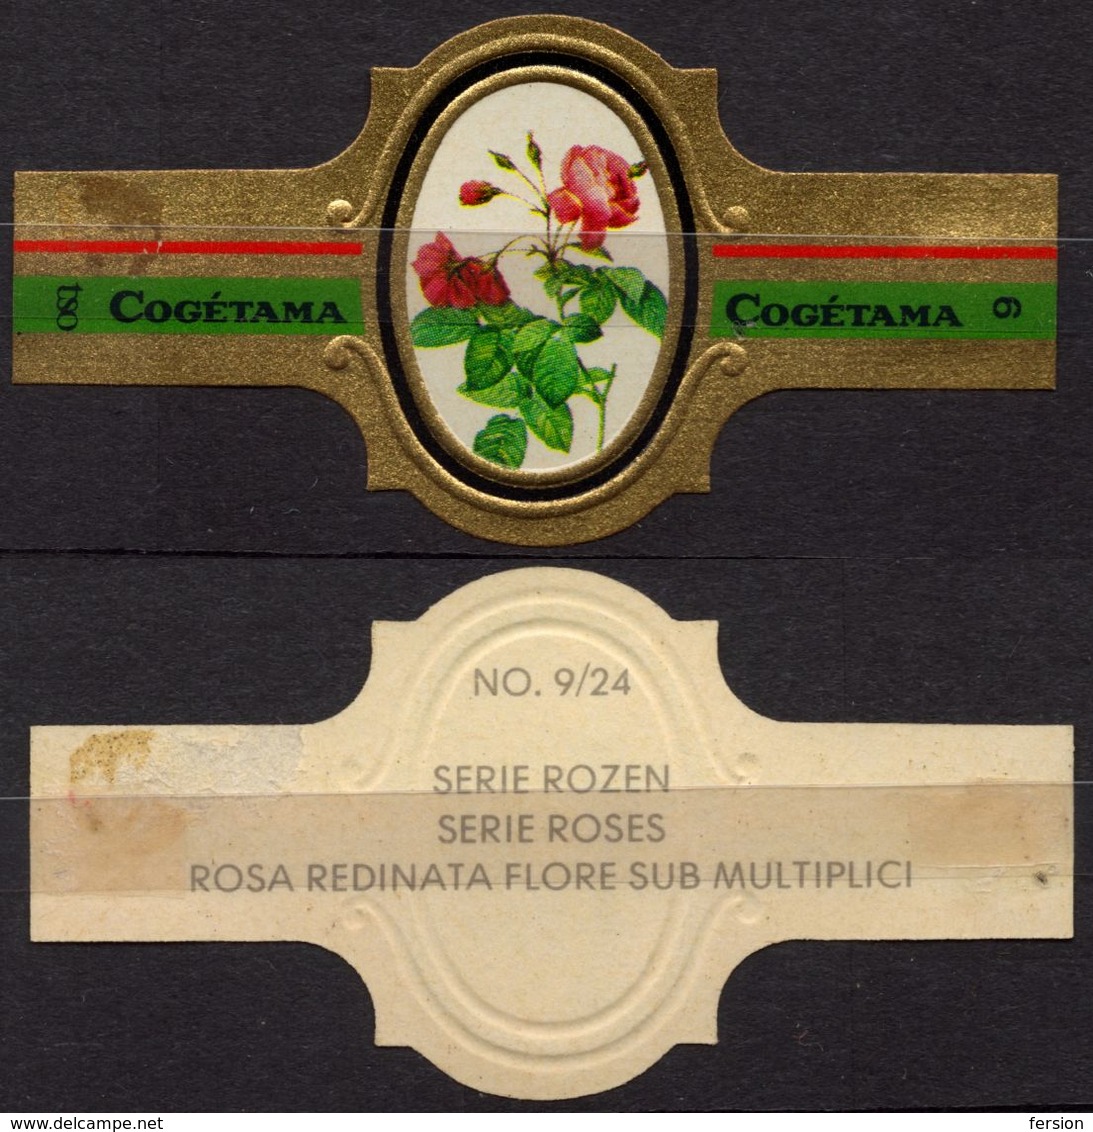 Redinata Flore Sub Multiplici - ROSE ROSES - Netherlands Holland / Cogétama / CIGAR CIGARS Label Vignette - Etiquettes